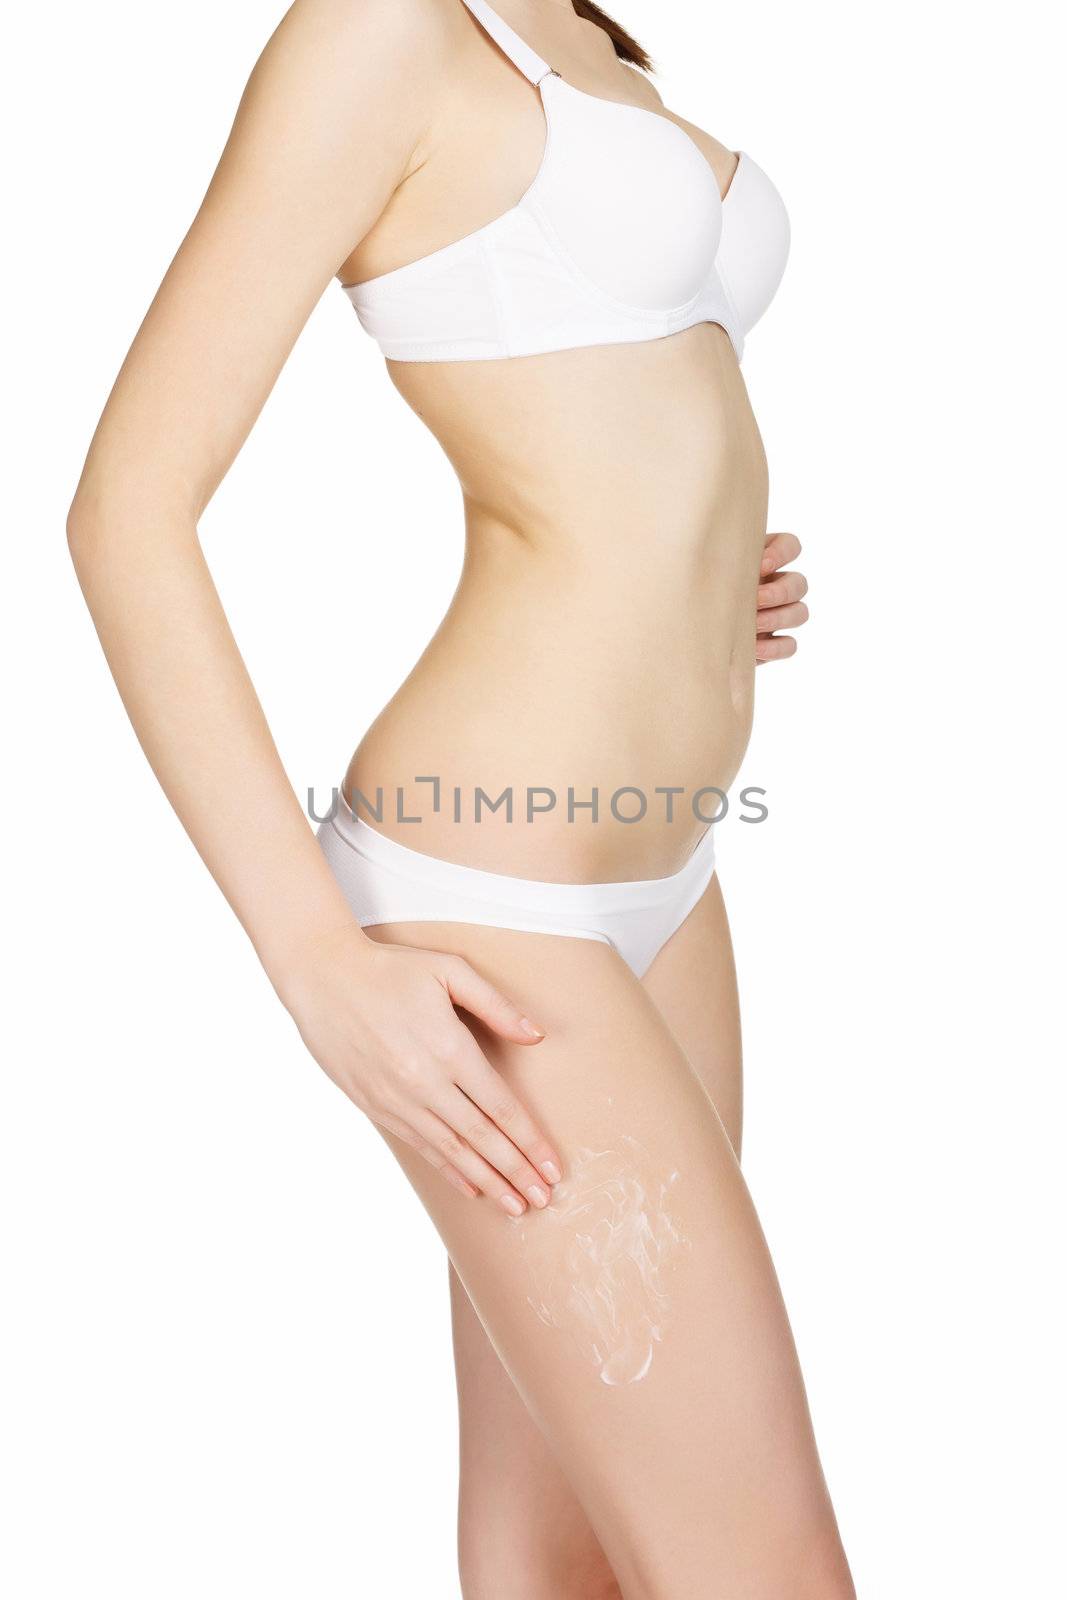 Slim woman applying moisturizer cream on her legs, isolated on white background